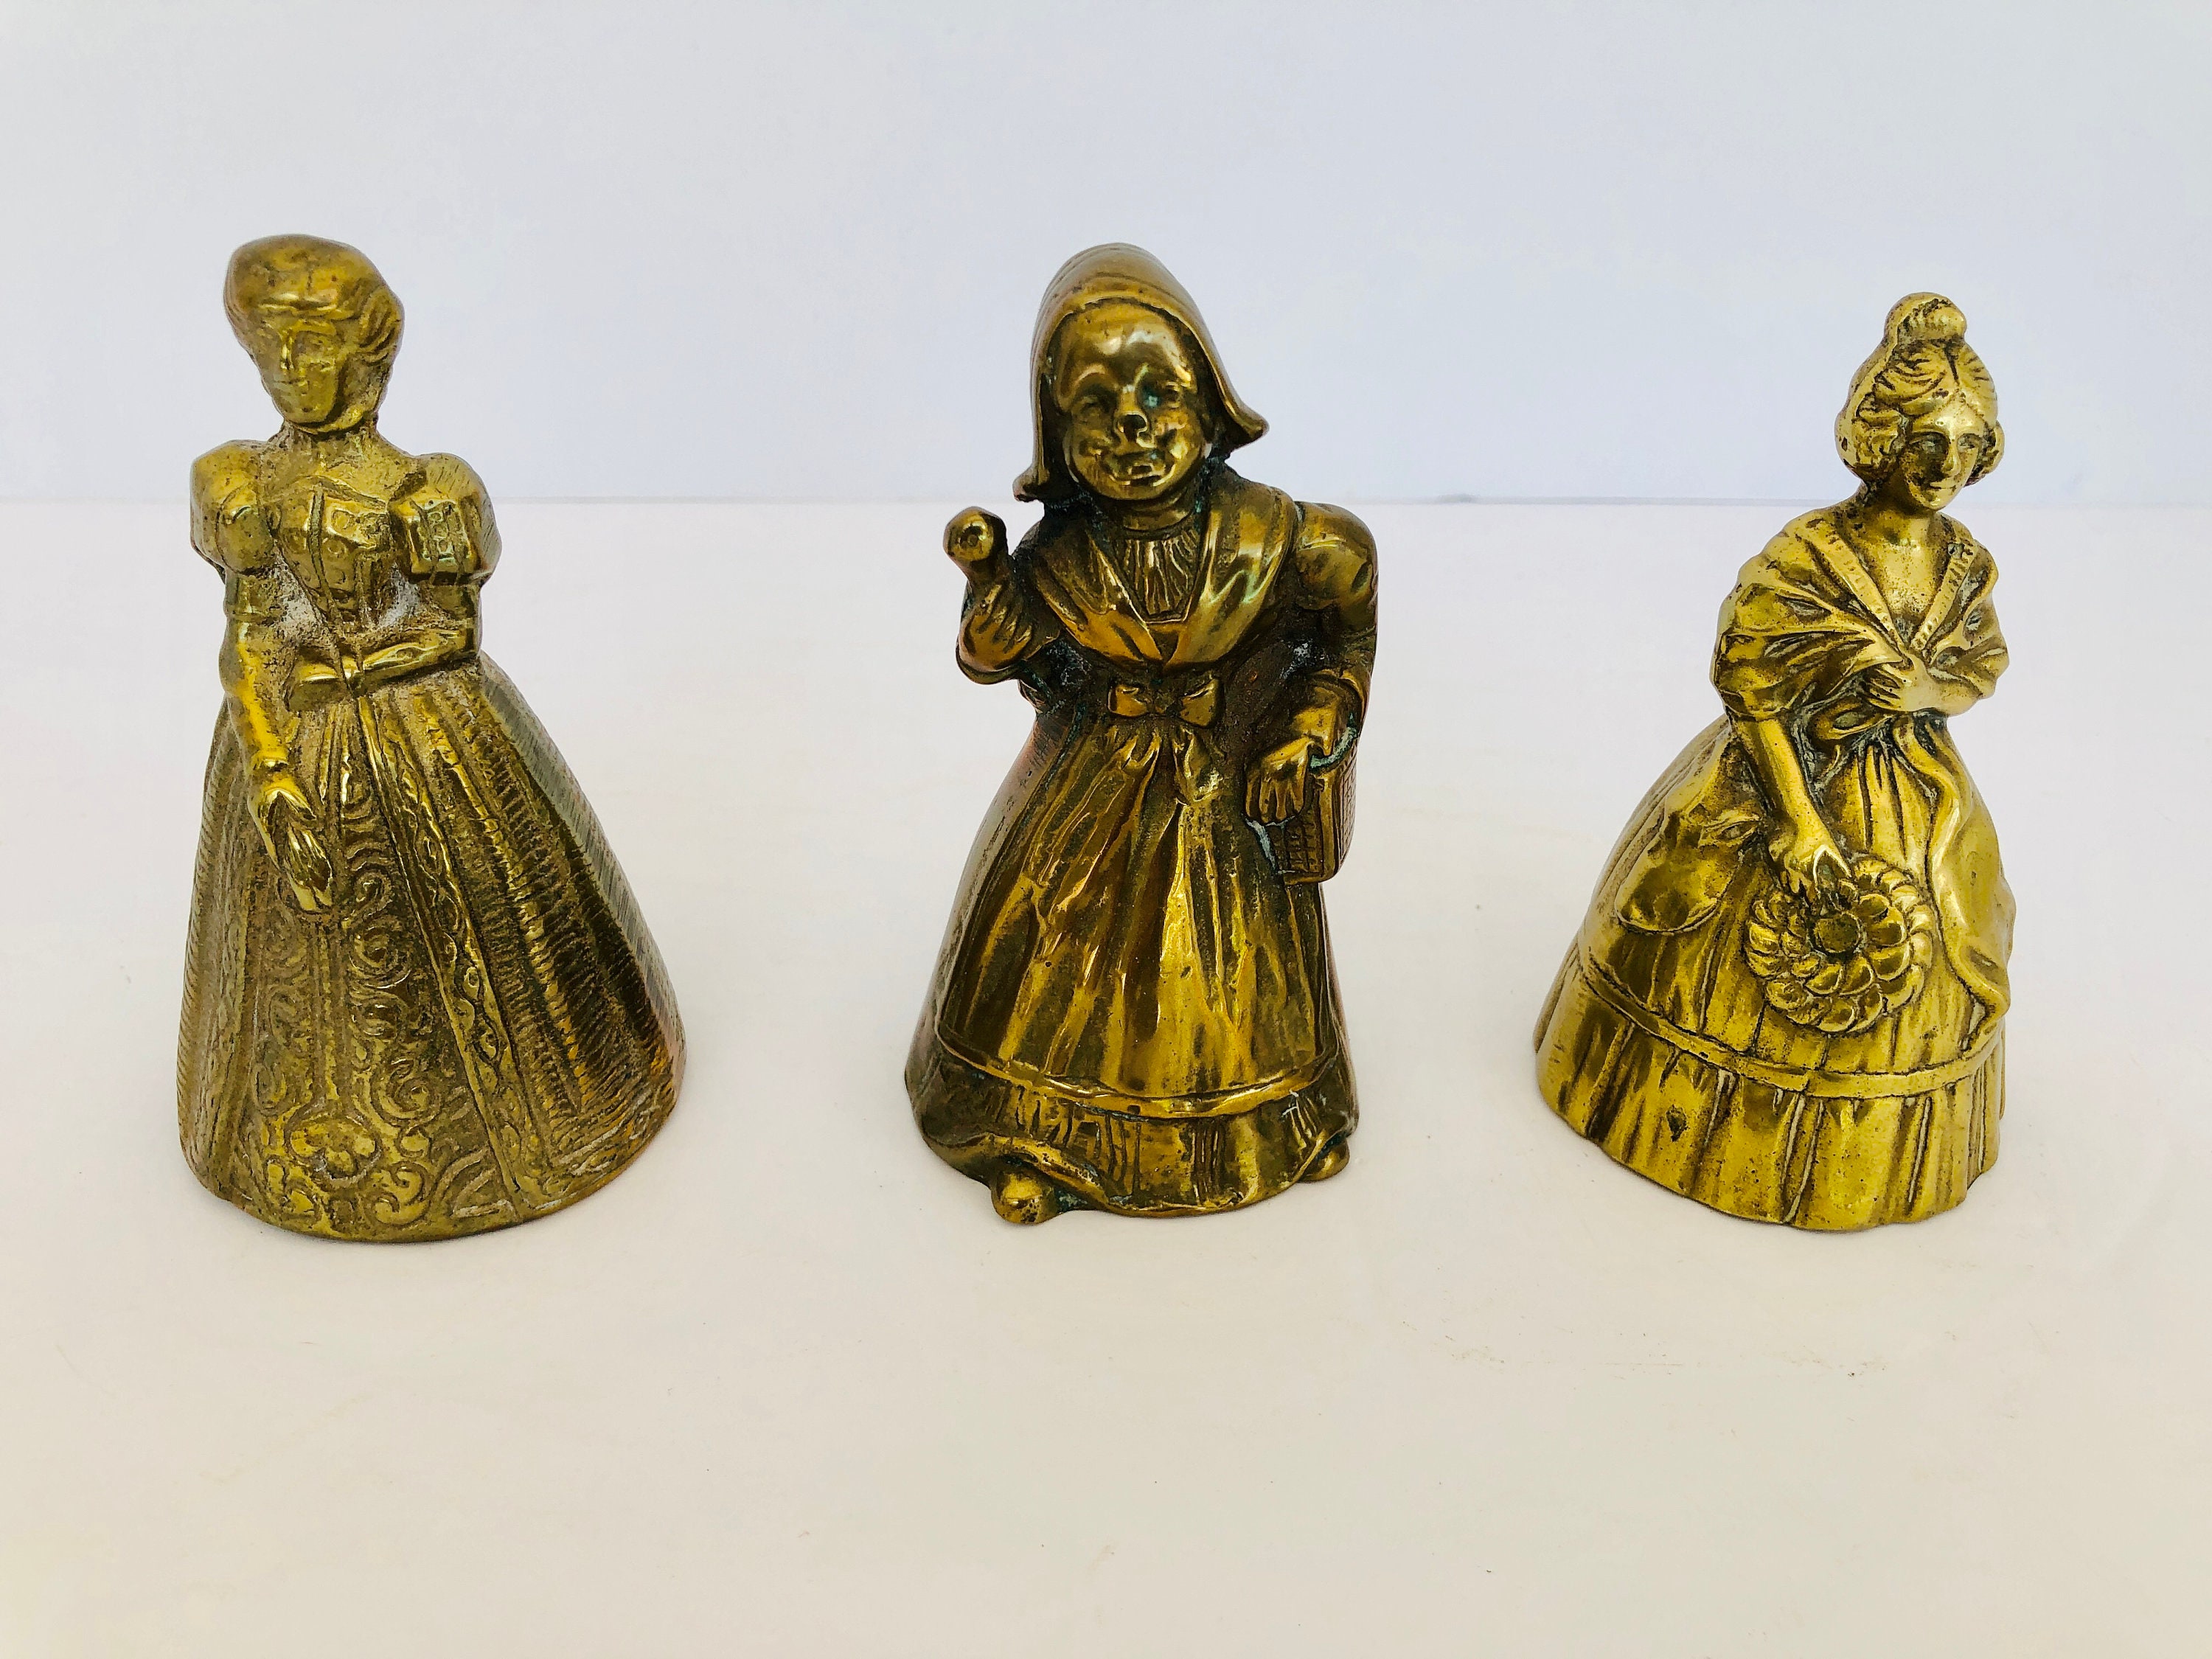 VINTAGE SOLID BRASS Dutch Lady Bell Desk Ornament Figurine £62.00 -  PicClick UK